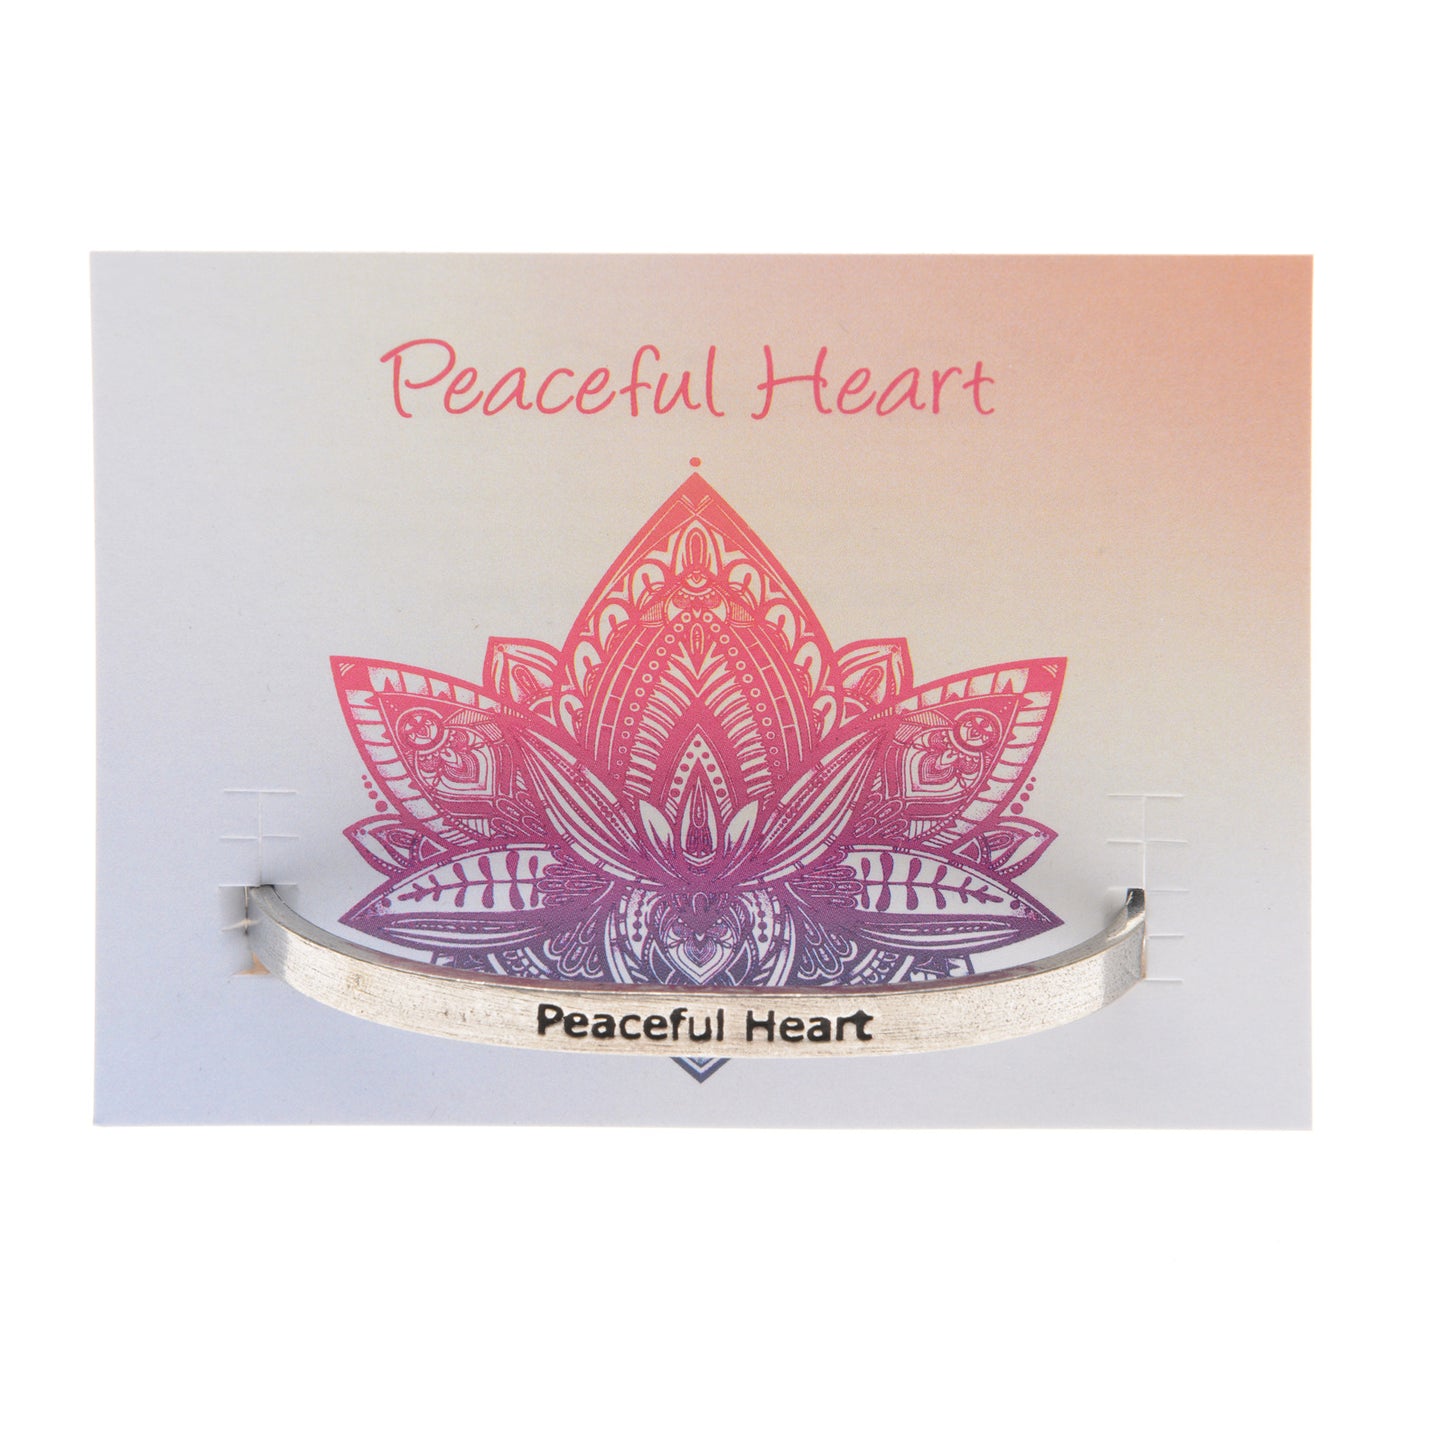 Peaceful Heart Quotable Cuff Bracelet on backer card